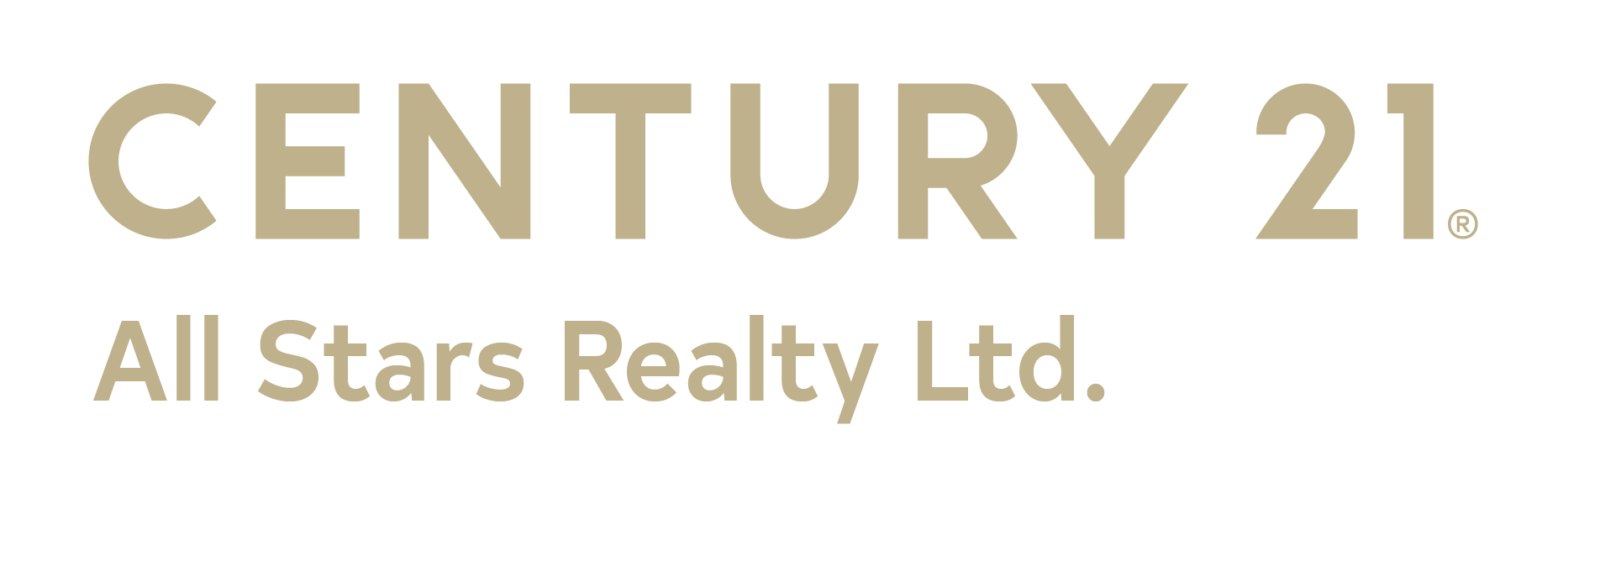 Century 21 All Stars Realty Ltd.